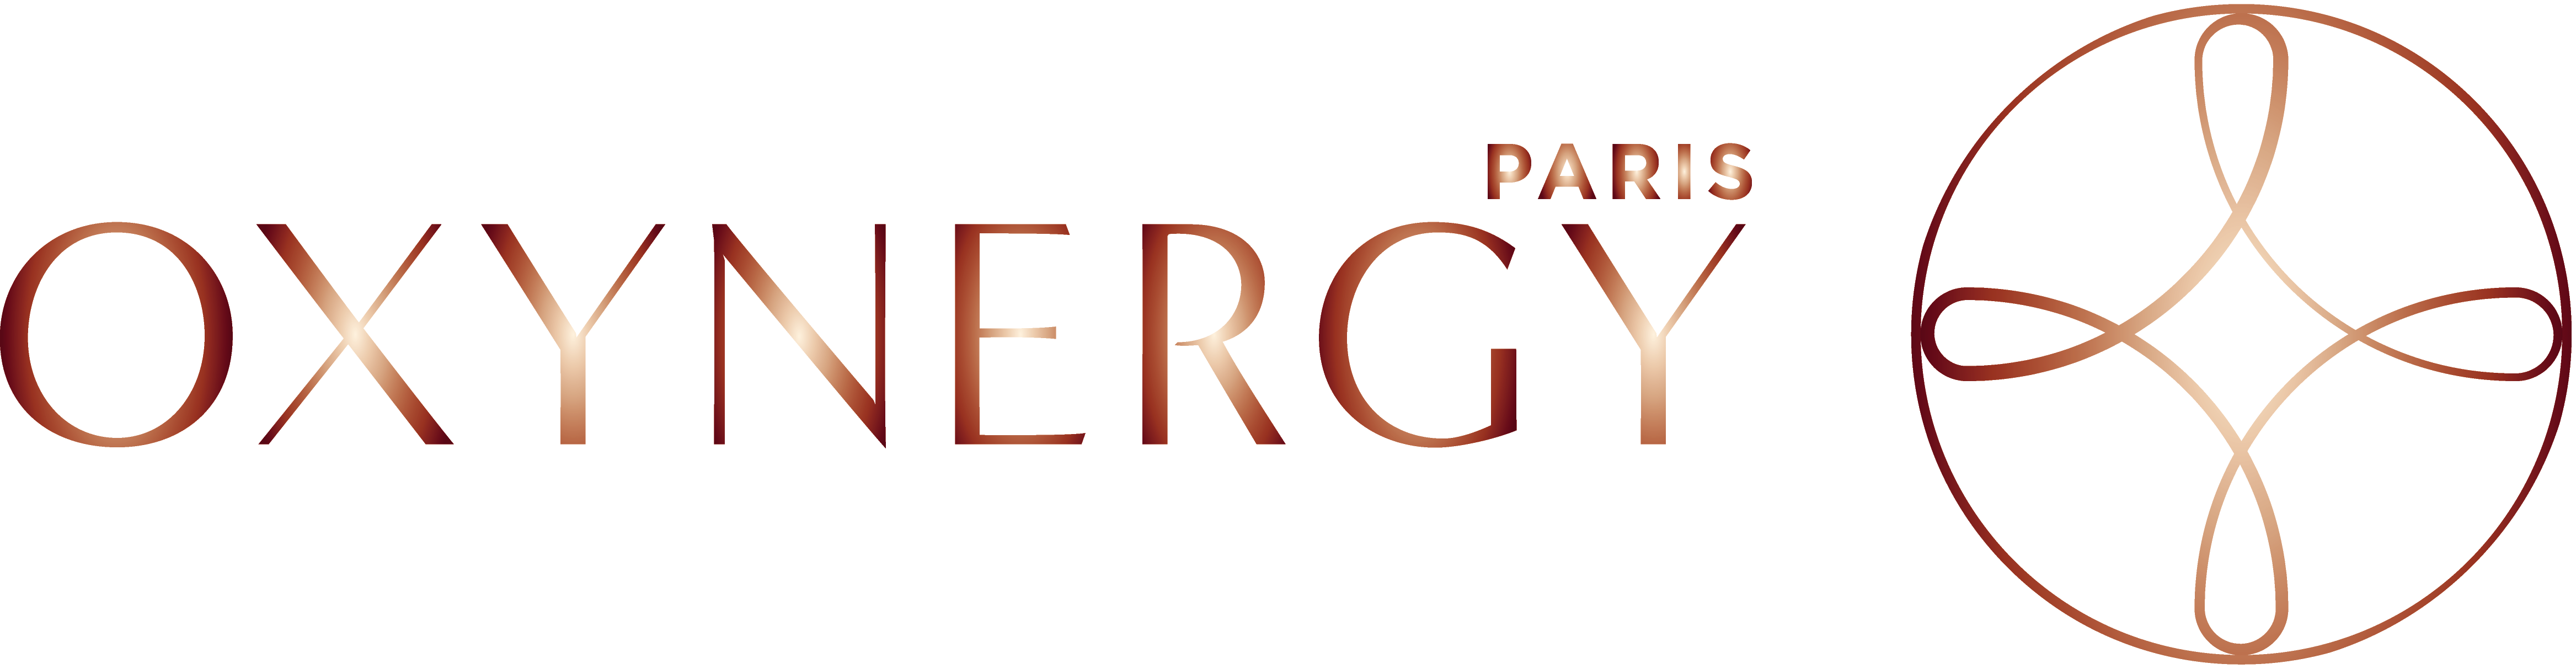 Oxynergy paris